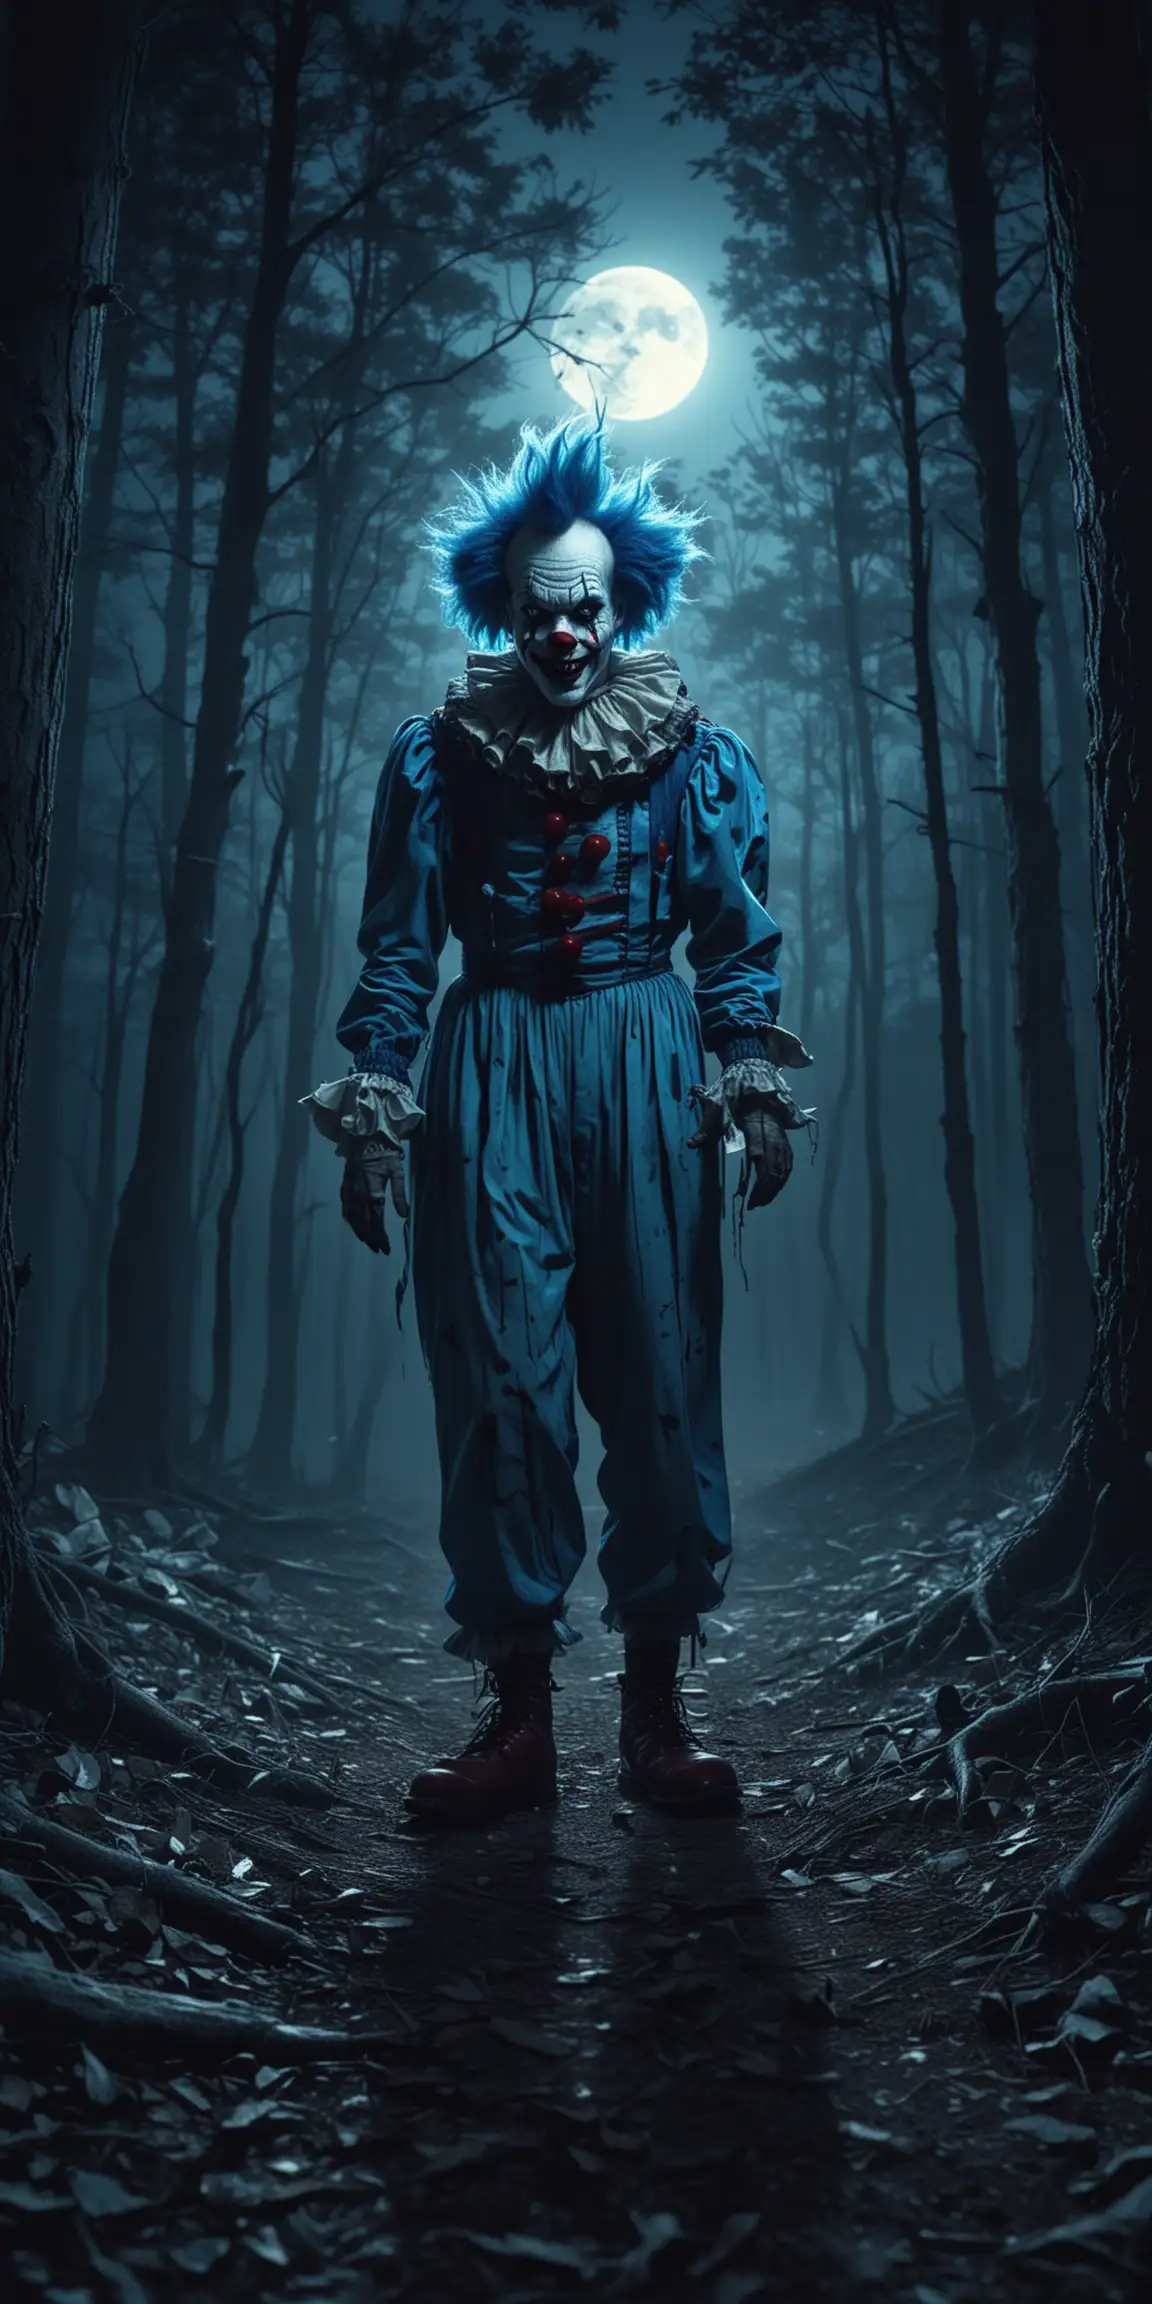 Creepy clown, blue moonlight, Scary forest. blue shadows